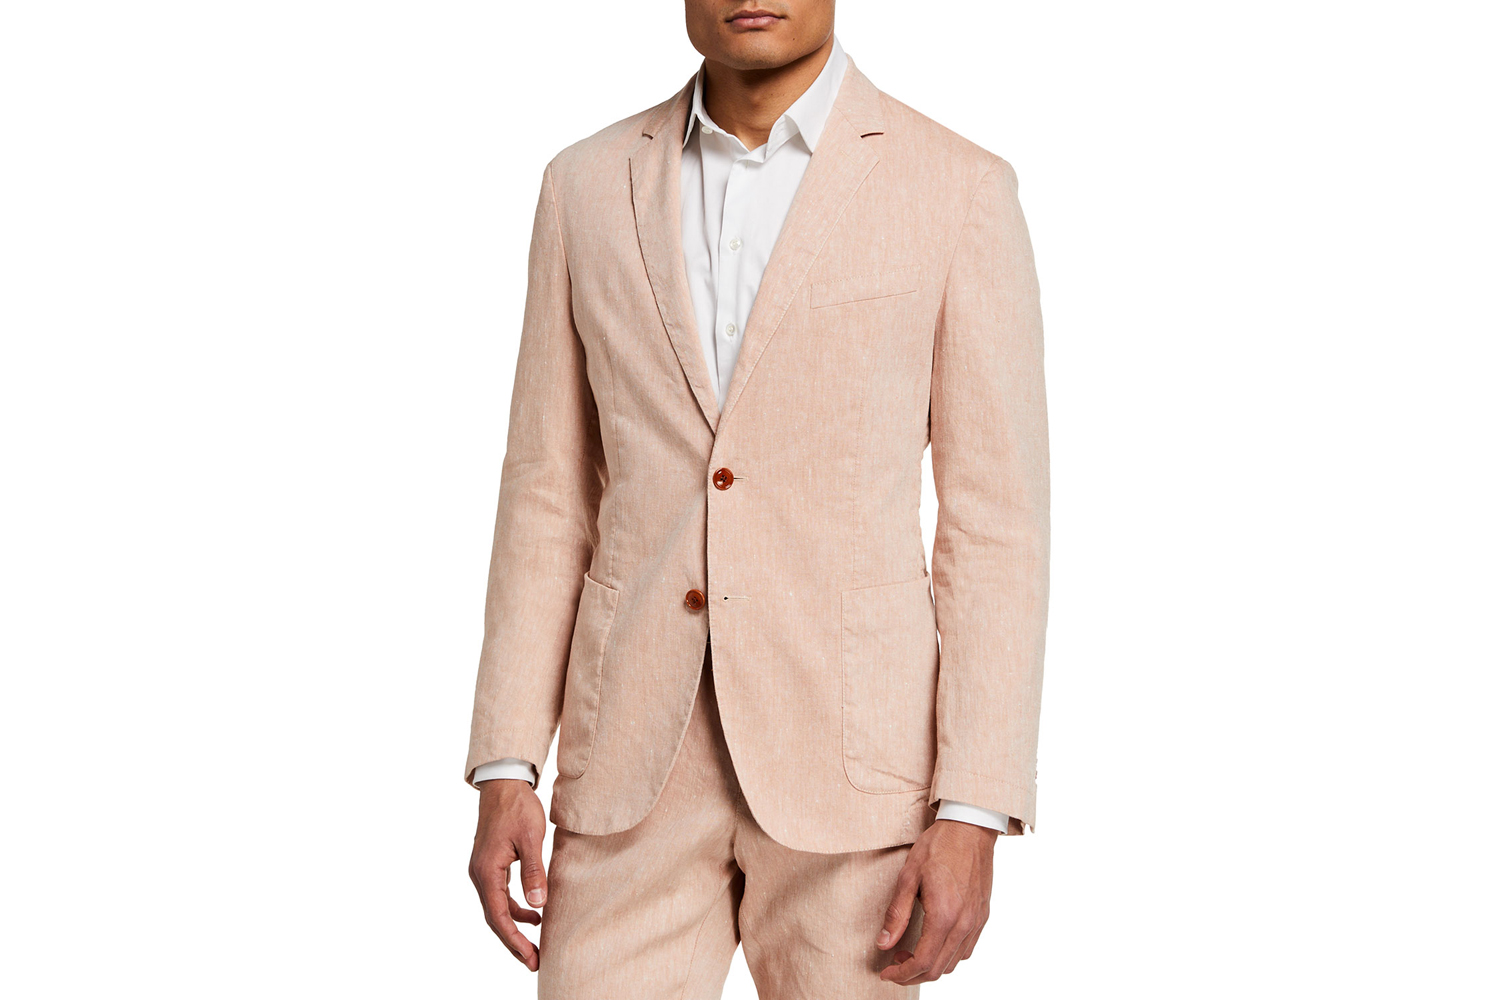 Hanry Linen-Blend Suit Jacket
BOSS